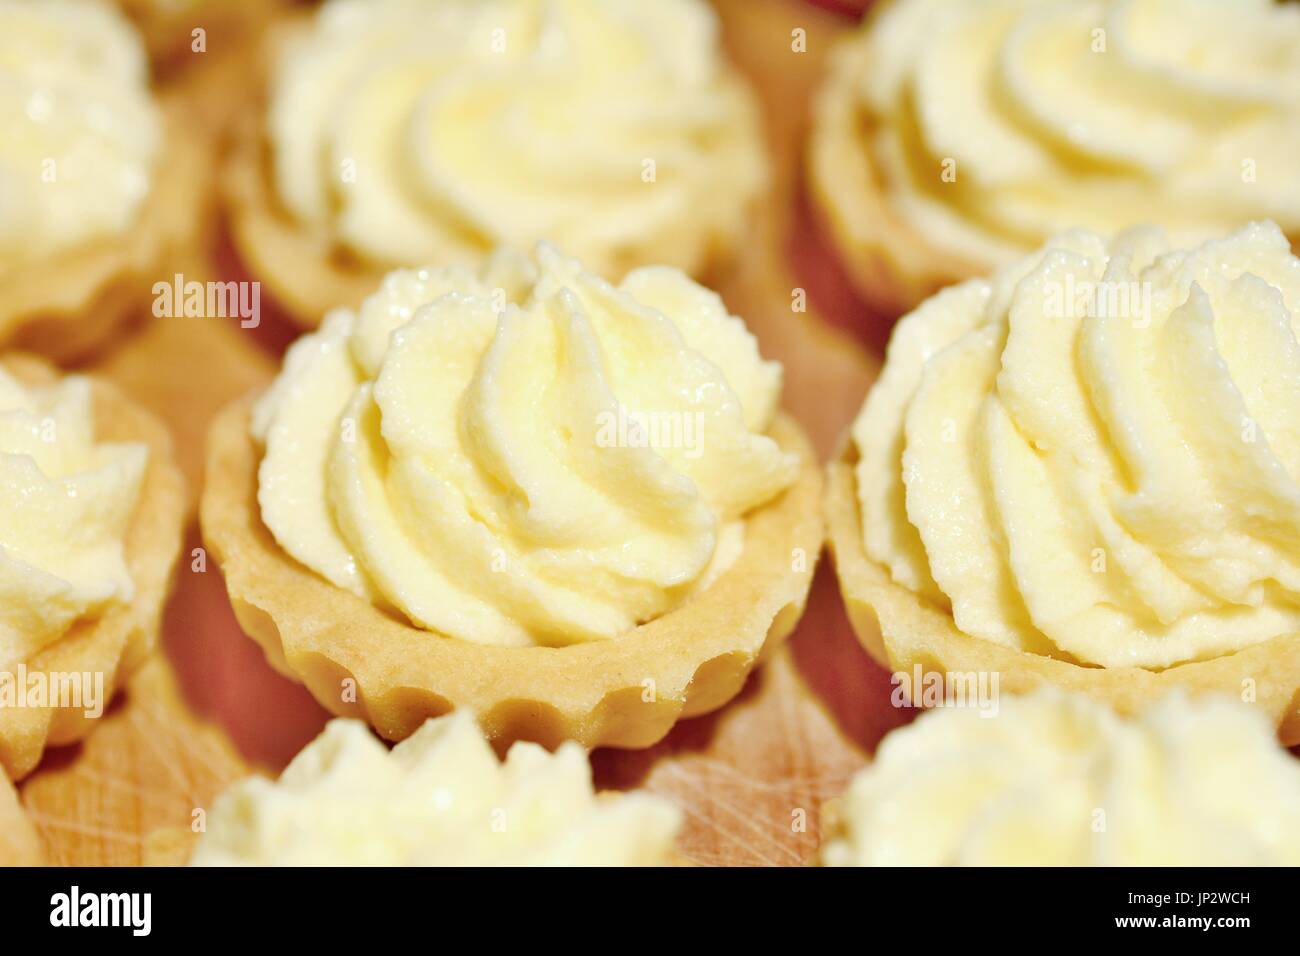 Closeup of cupcakes filled with vanilla cream. Stock Photo